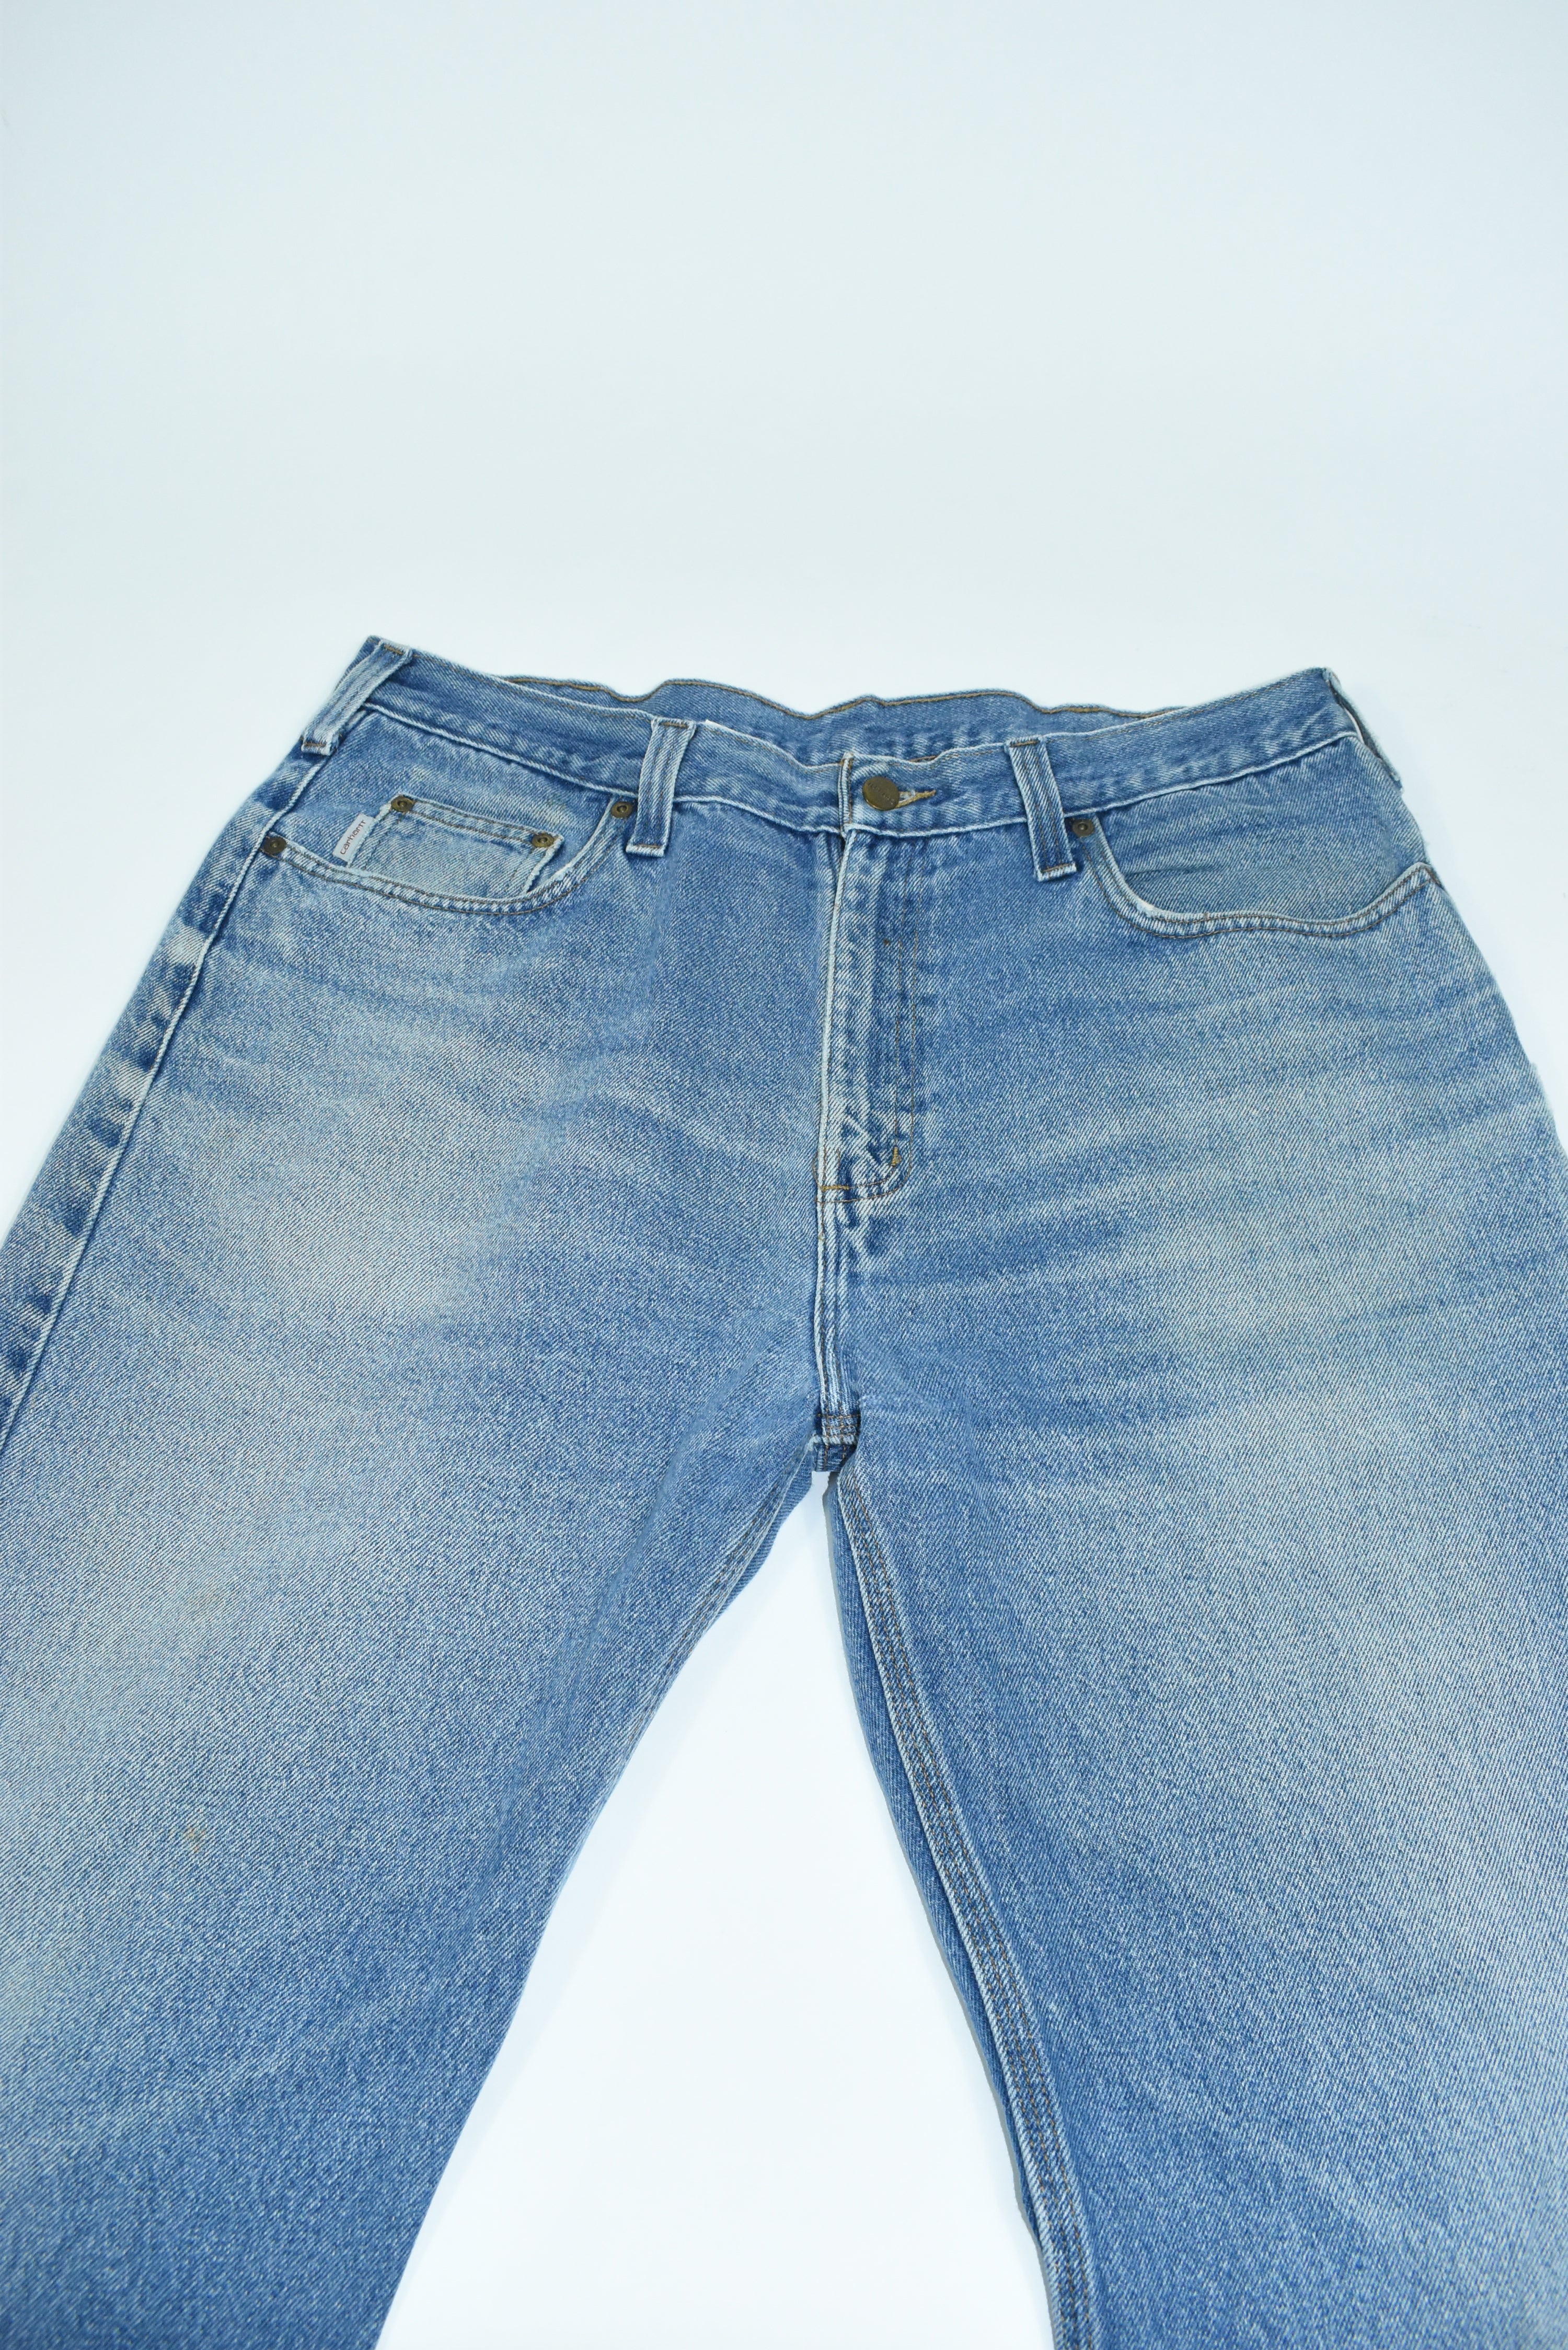 Vintage Carhartt Blue Jeans 38